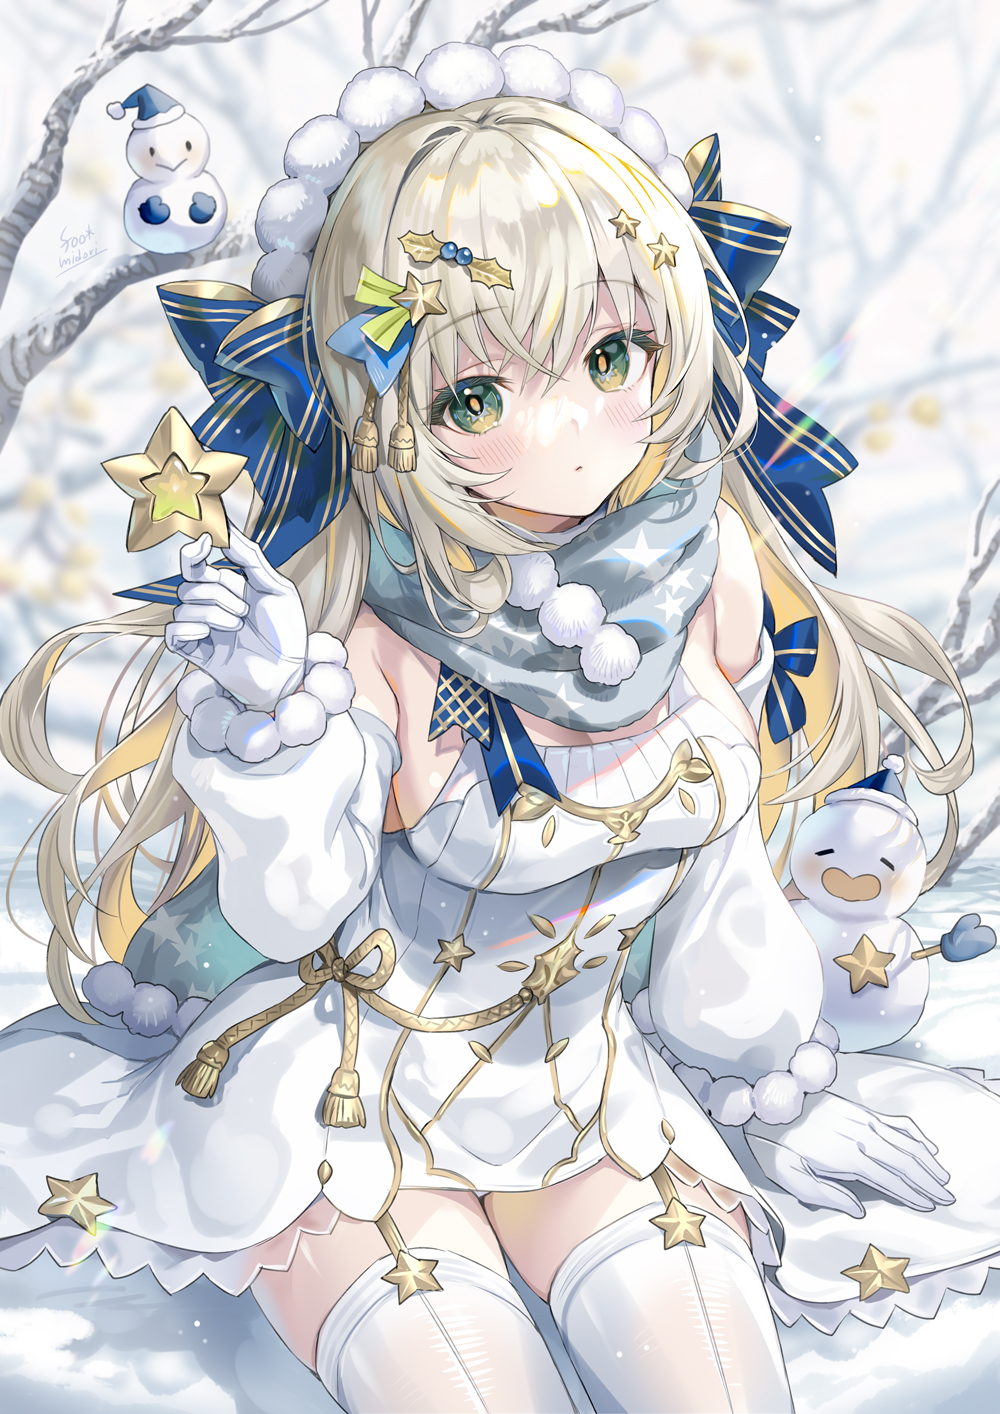 Anime 1000x1414 anime anime girls portrait display stockings gloves stars snow scarf blonde green eyes snowman